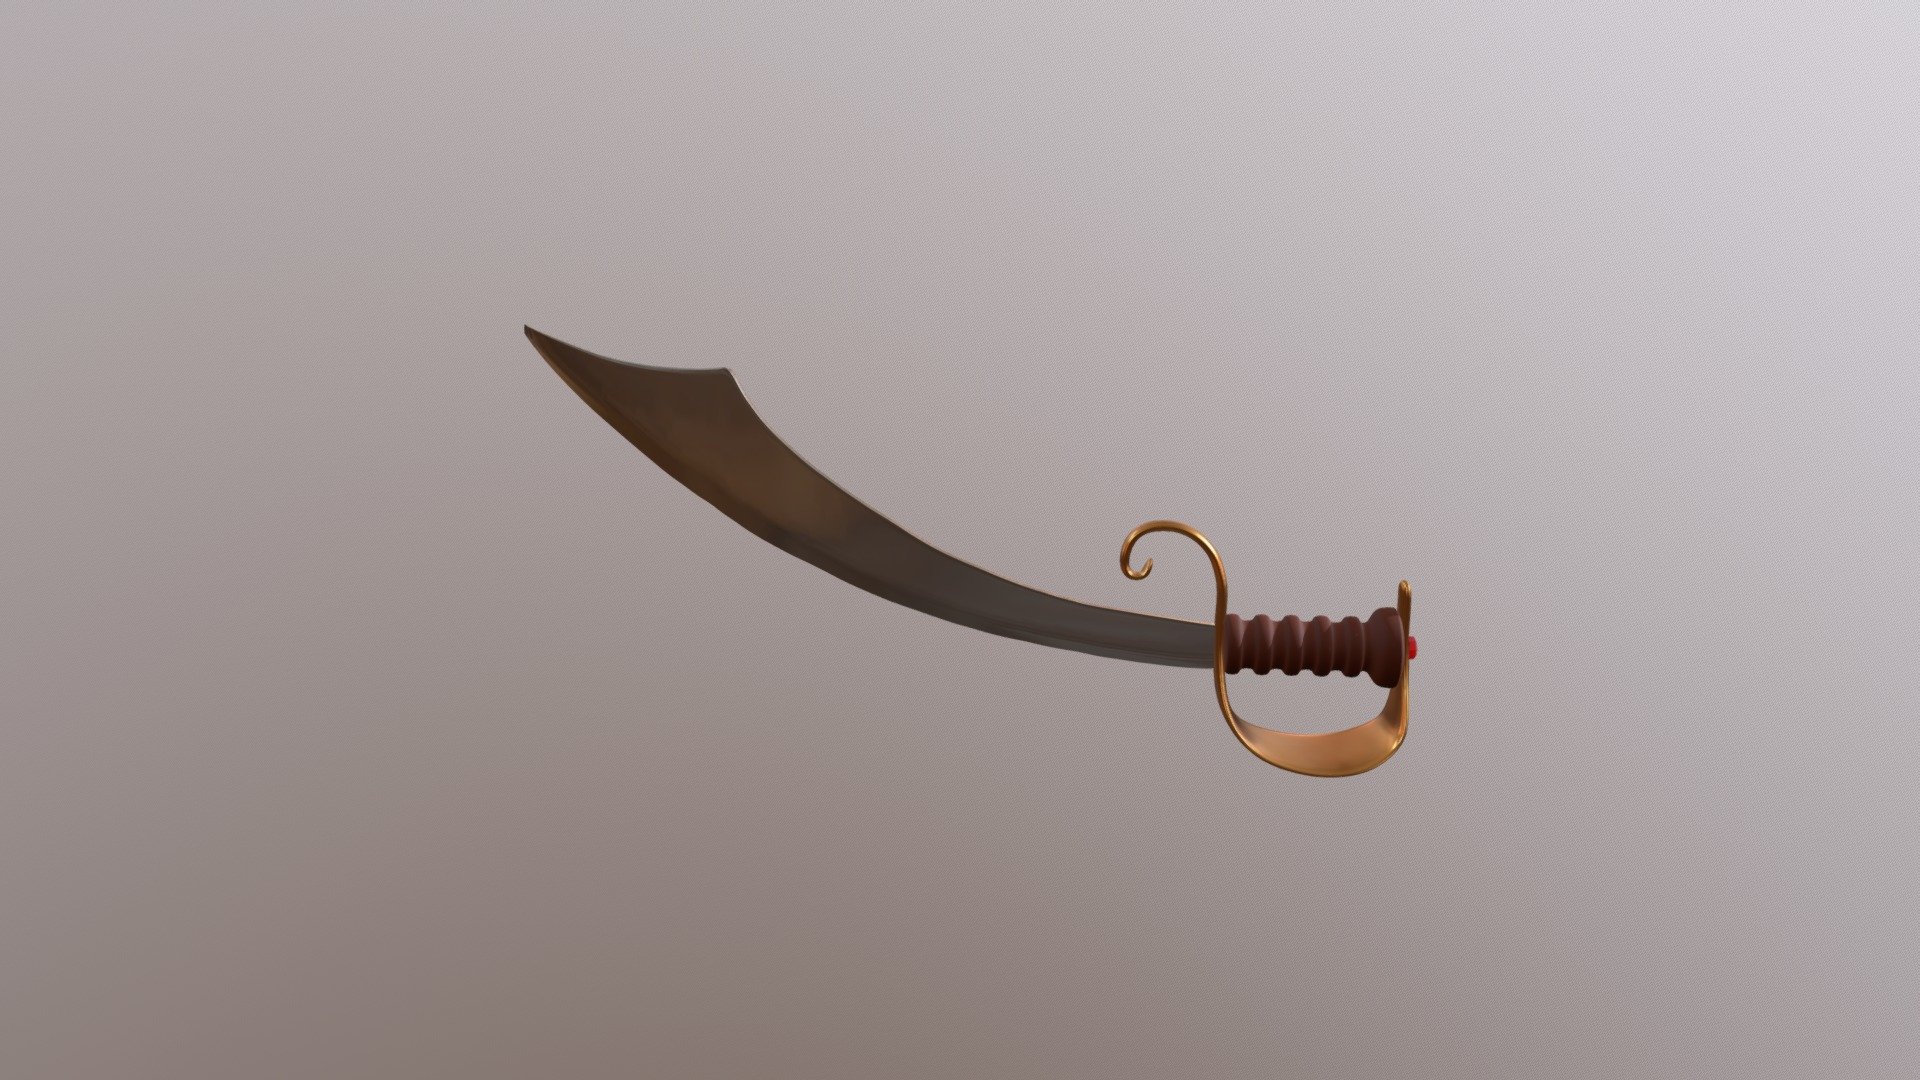 Pirate Sword concept model - Pirate Sword - 3D model by Eurus Workshop (@sirahi) 3d model